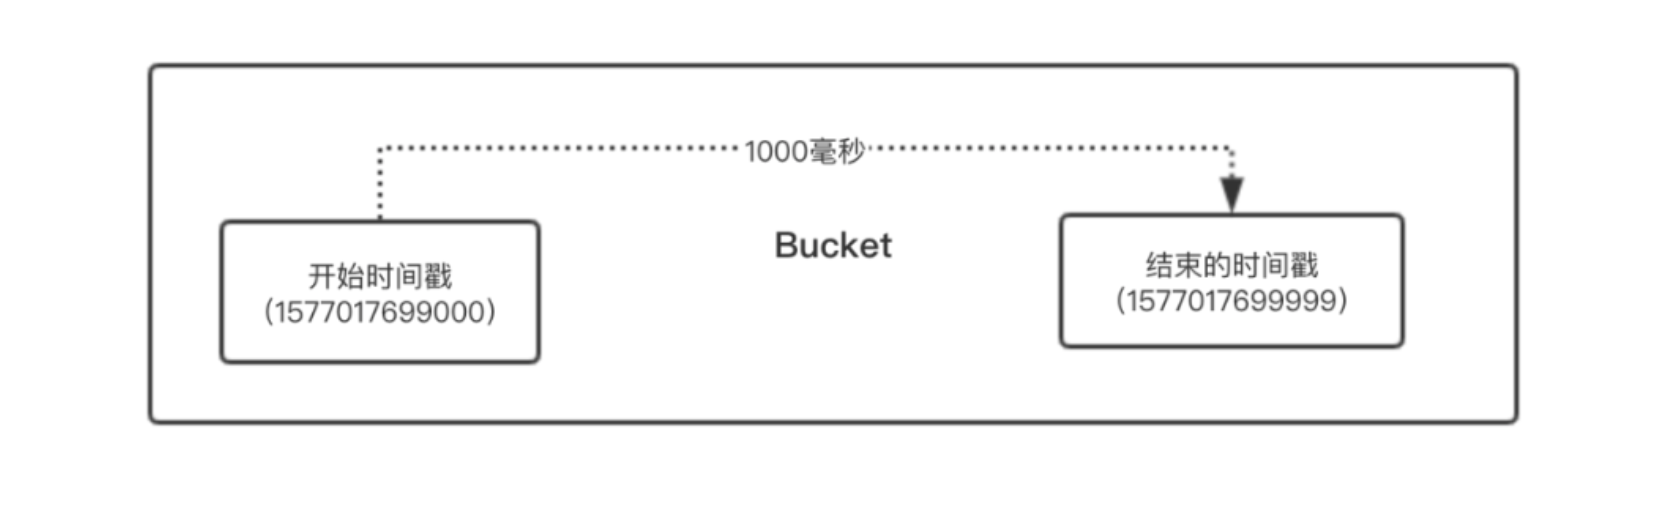 04-02-bucket